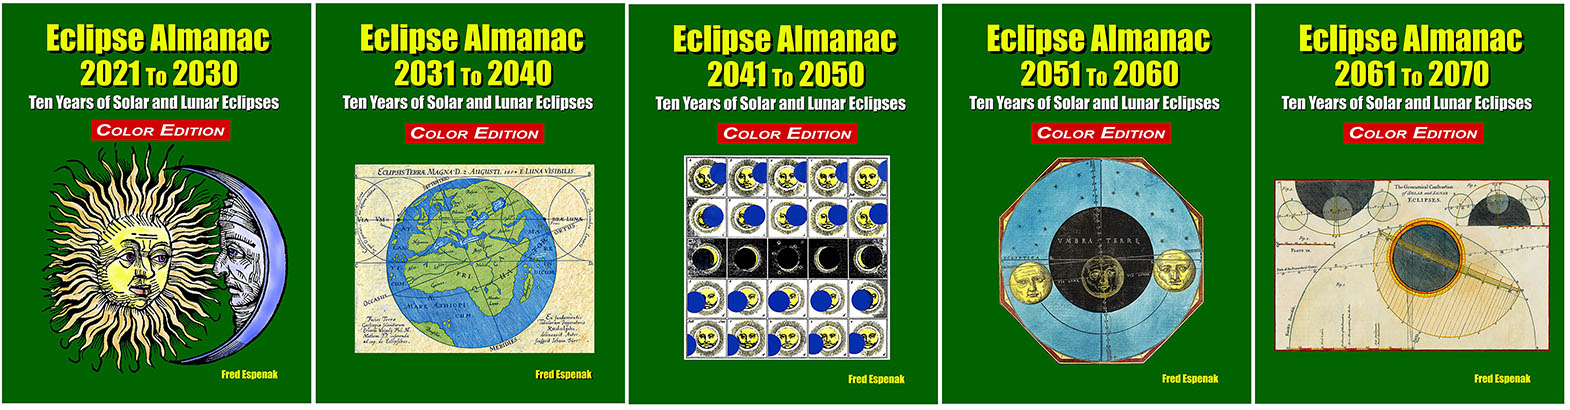 Eclipse Almanac